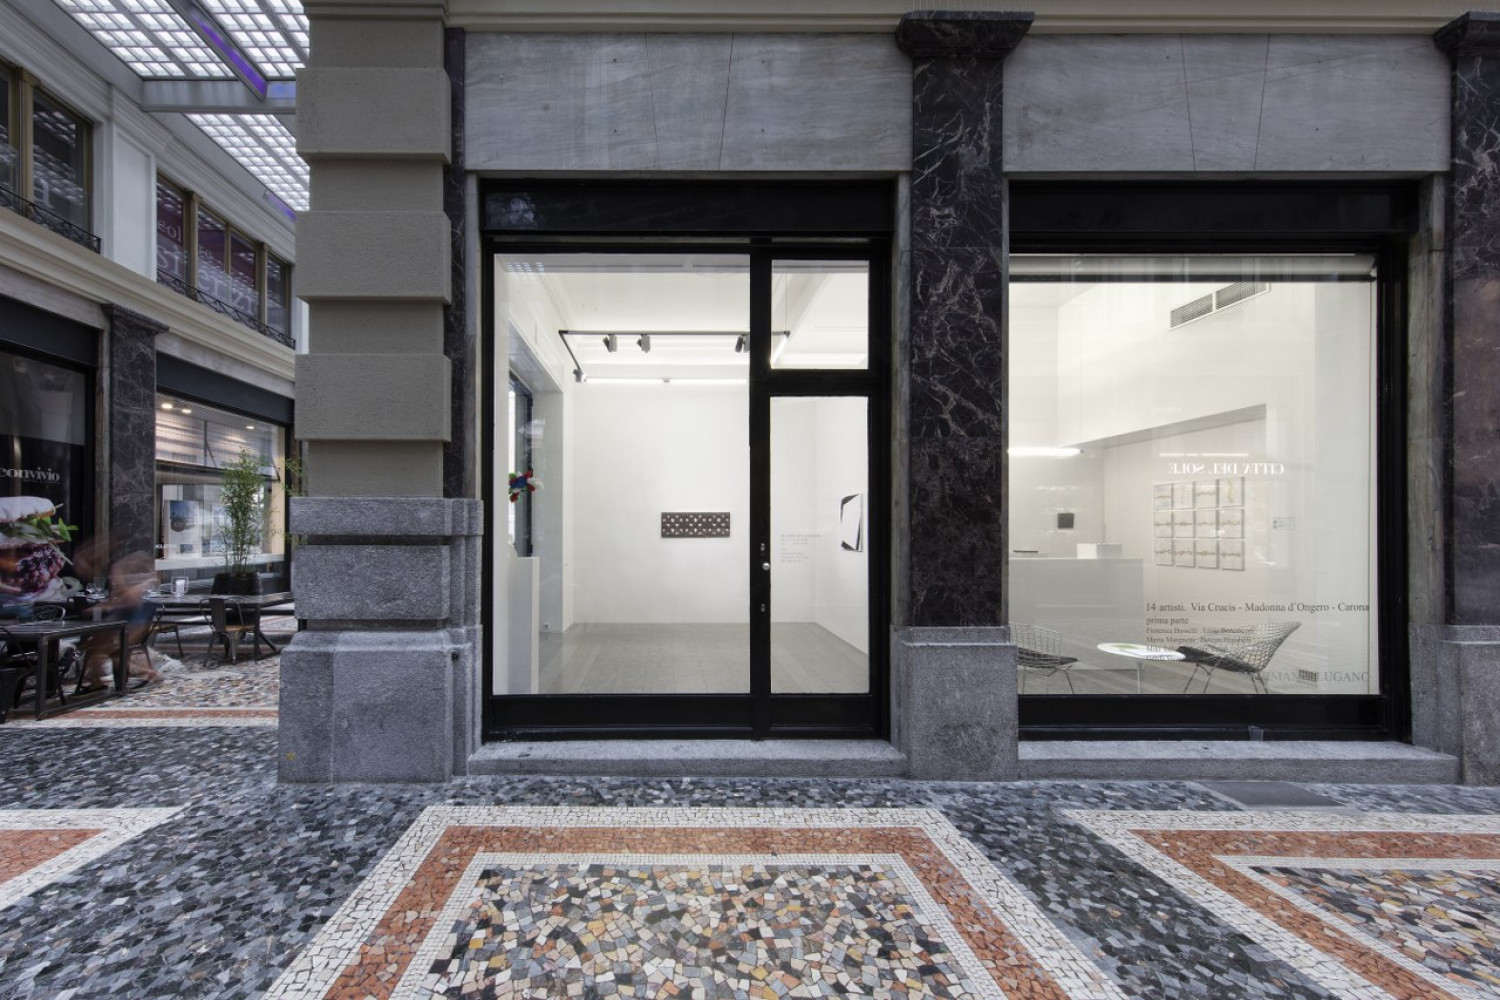 Installation view, Buchmann Lugano, 2018